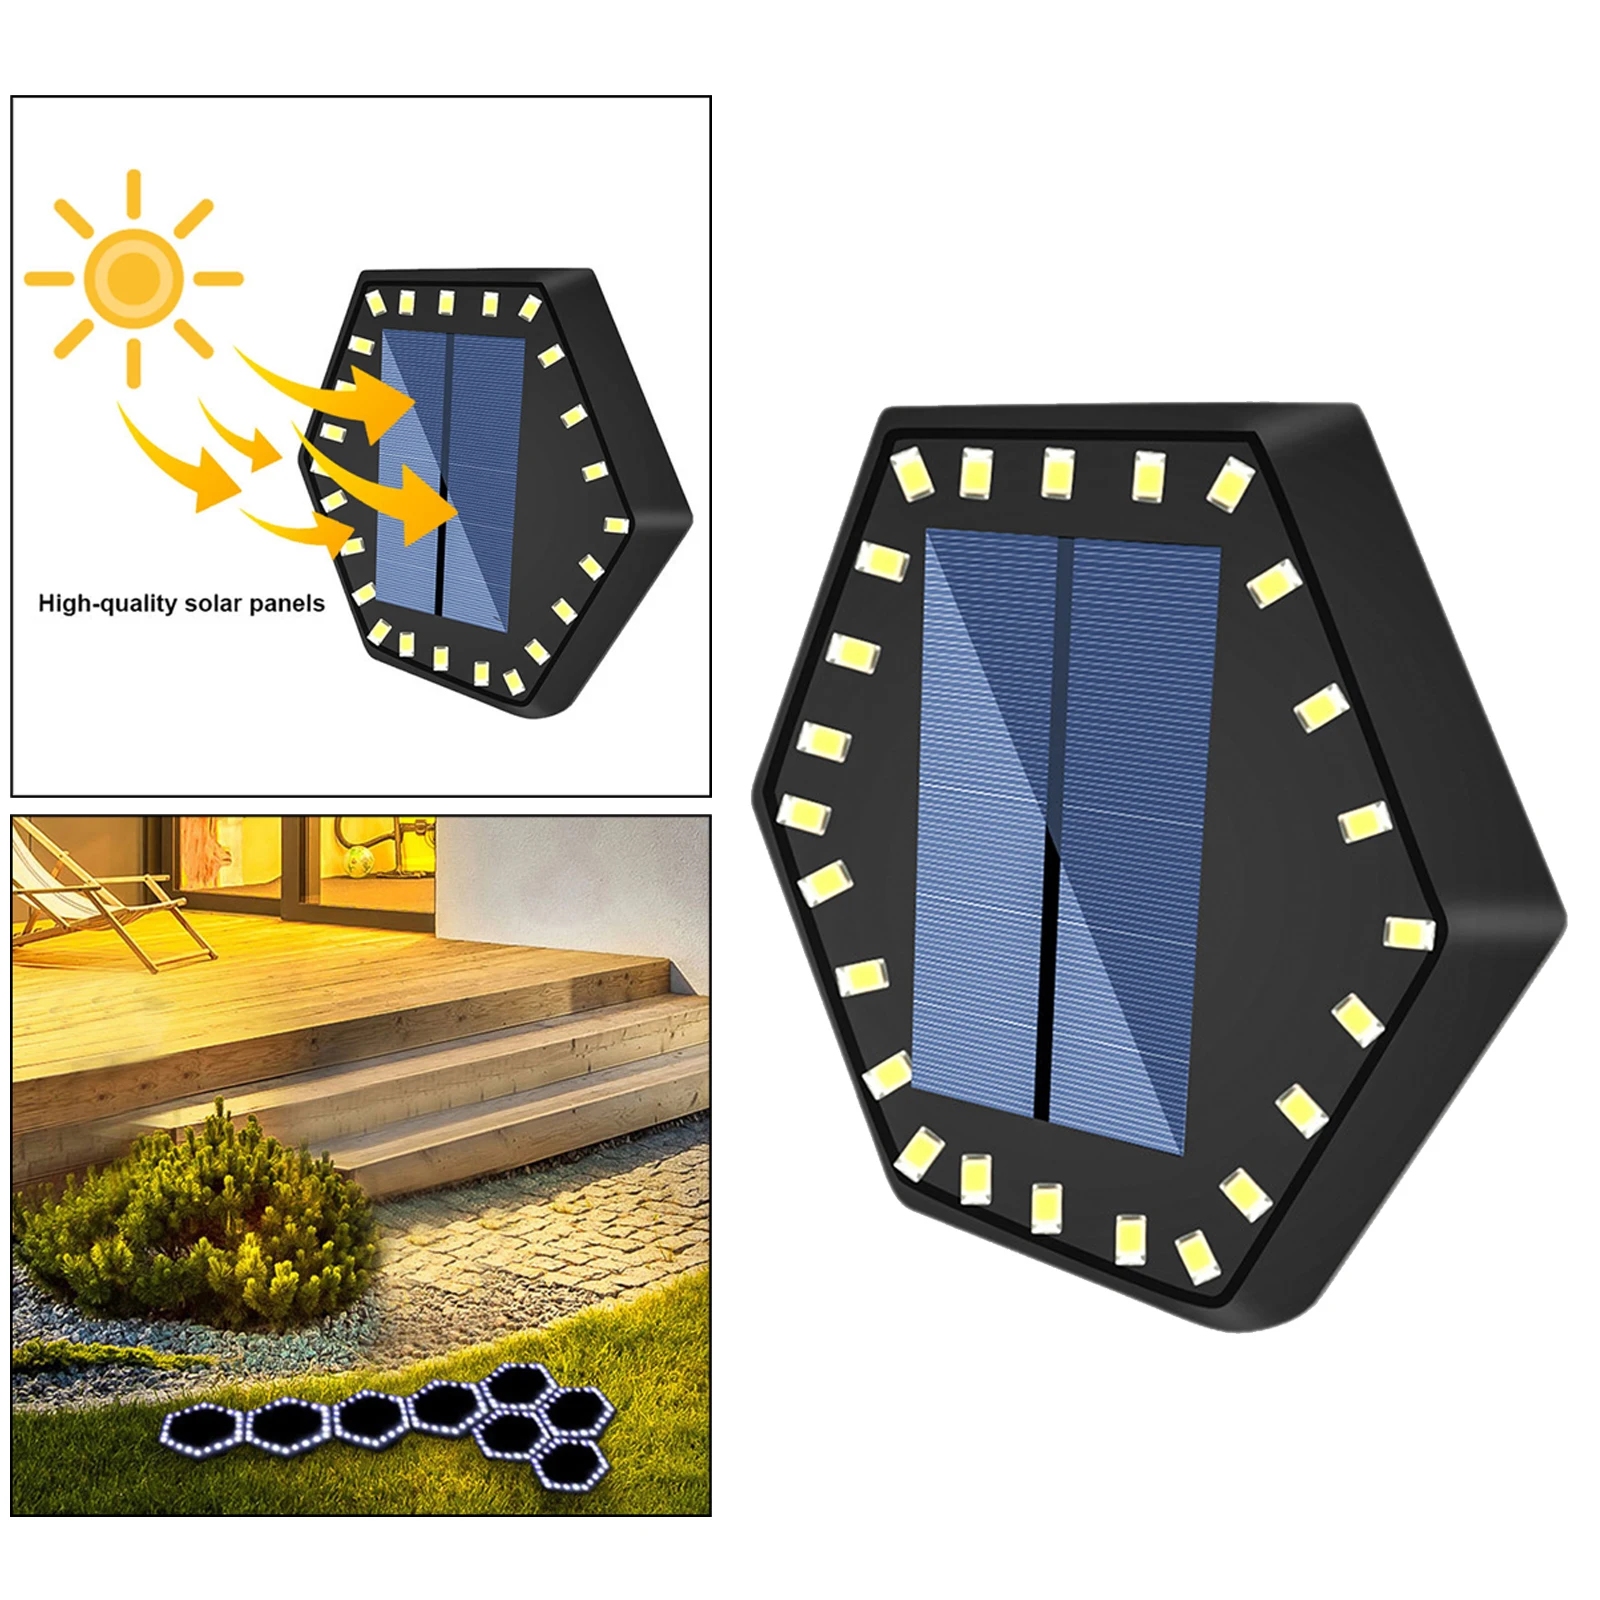 Hexagonal LED Solar Garden In-ground Light Lamp IP68 Waterproof Automatic